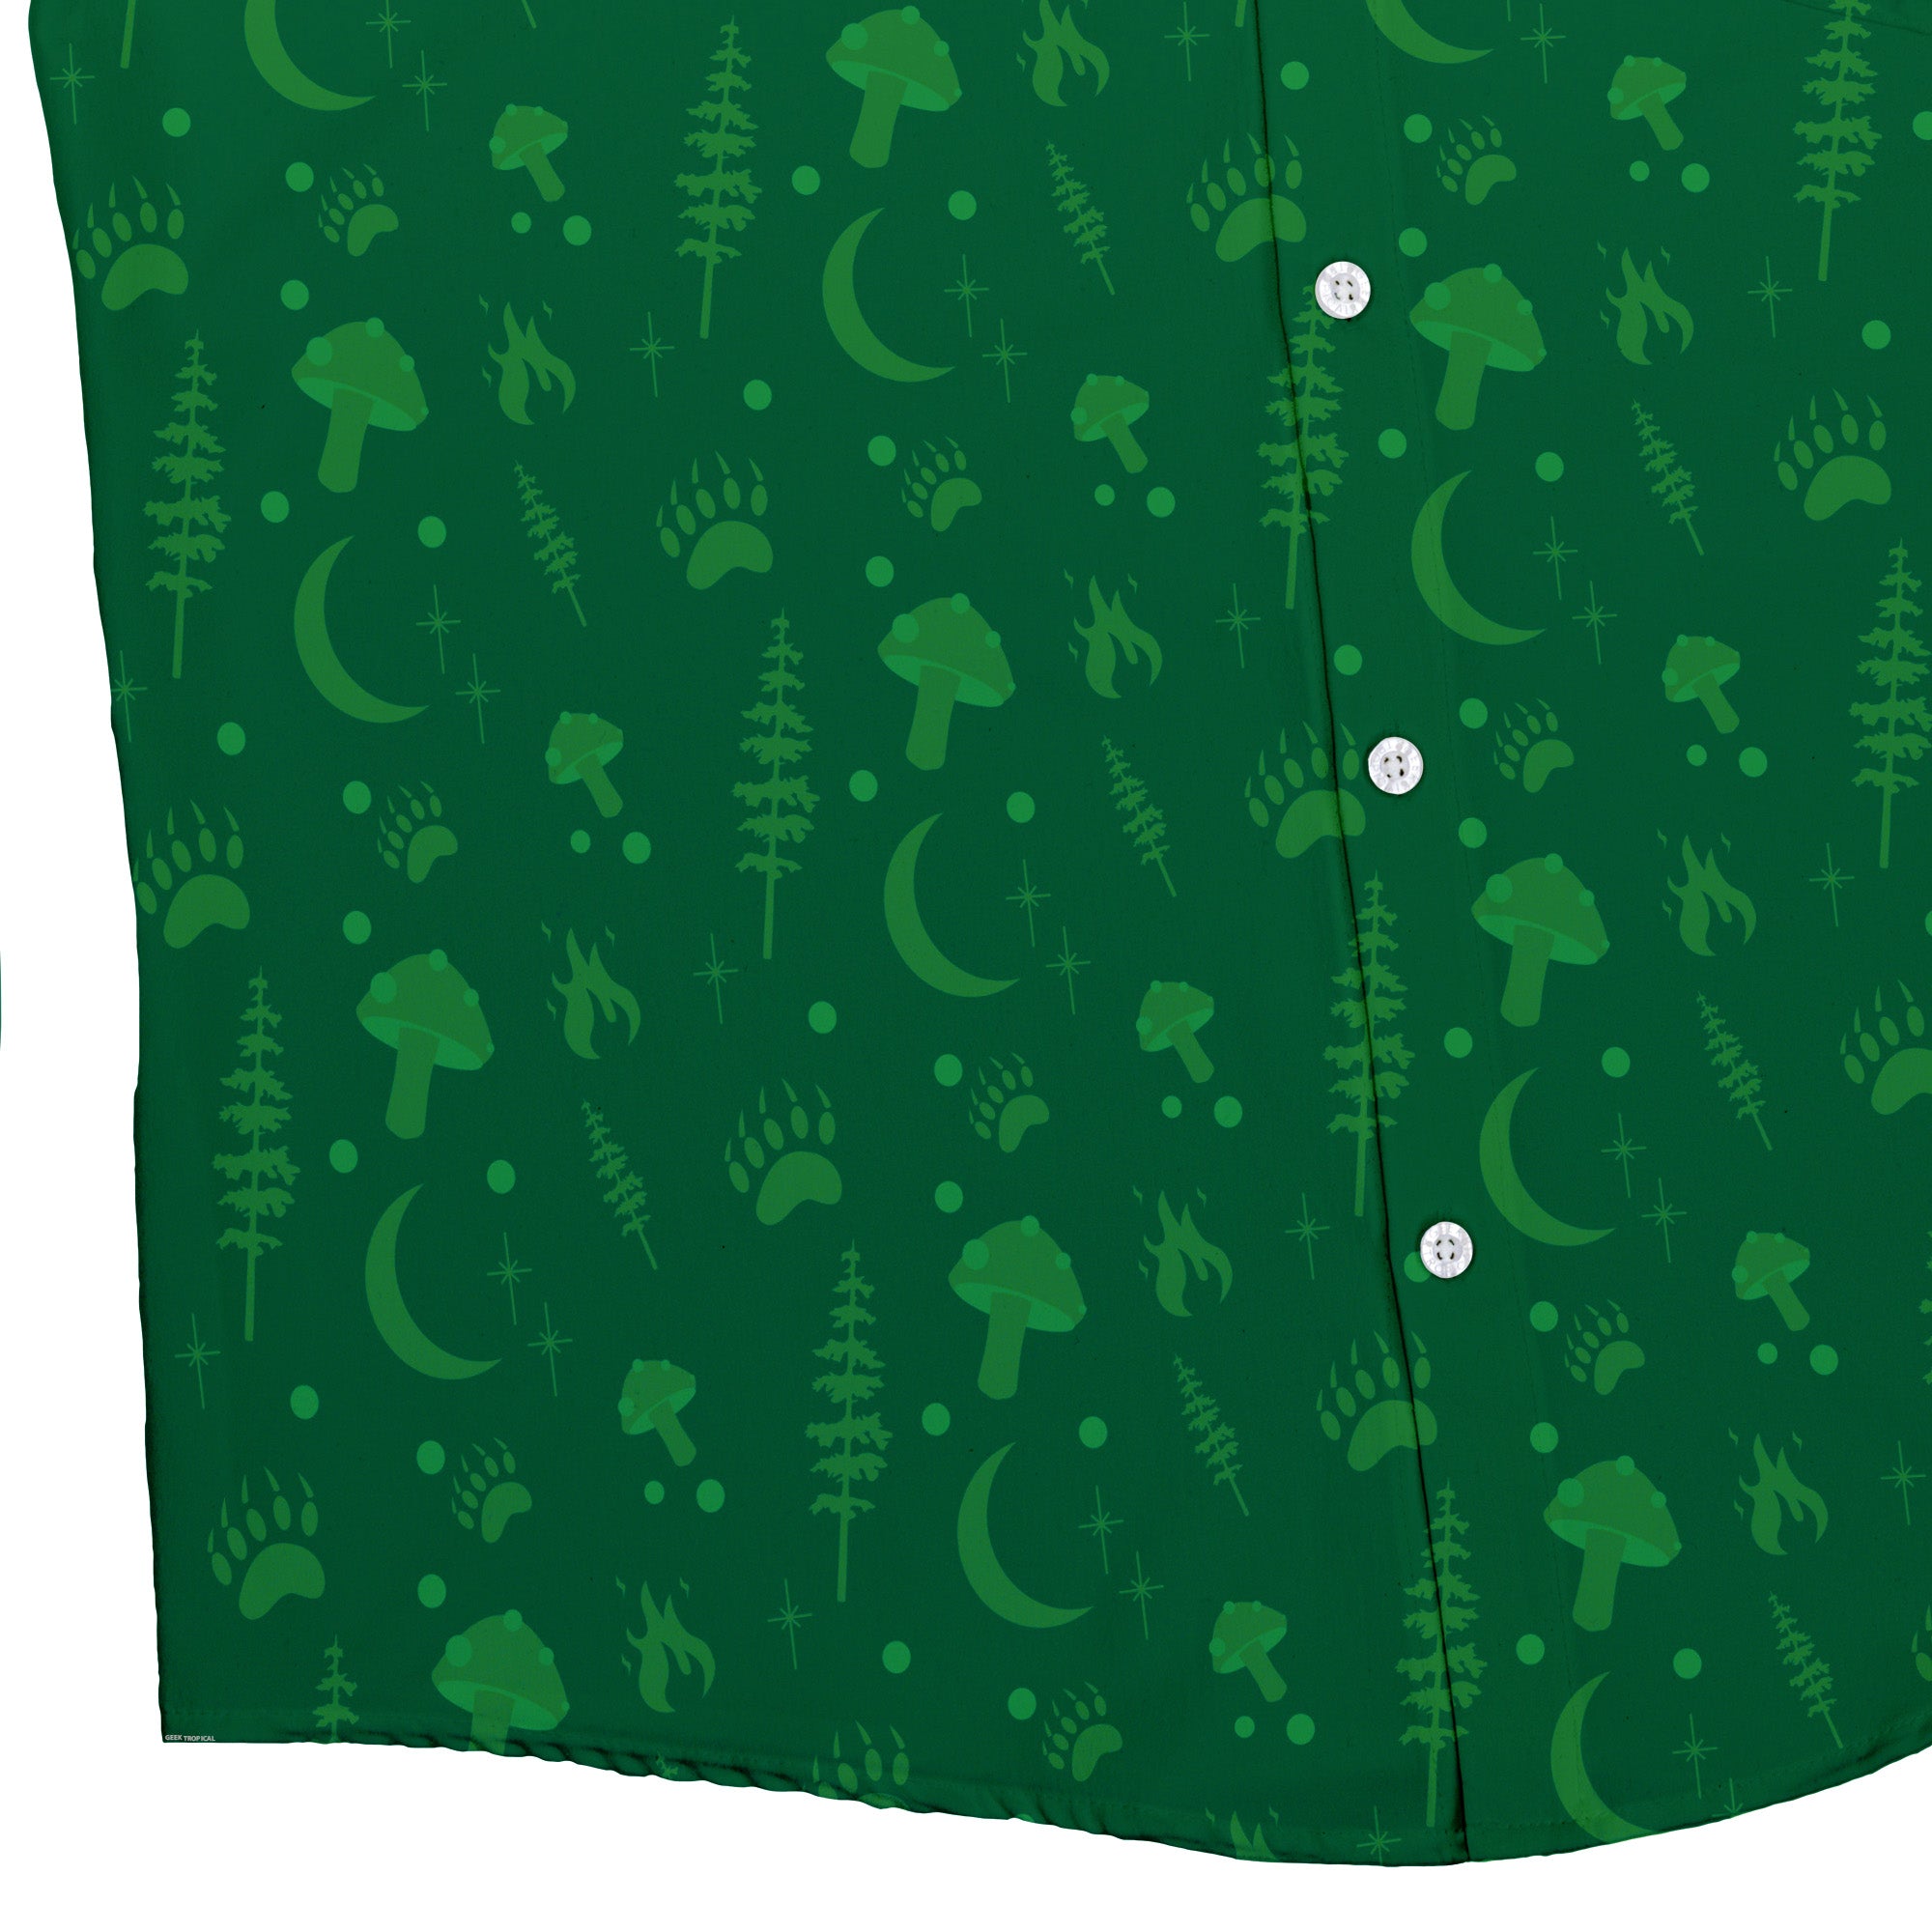 Dnd Druid Class Button Up Shirt - adult sizing - Design by Heather Davenport - dnd & rpg print